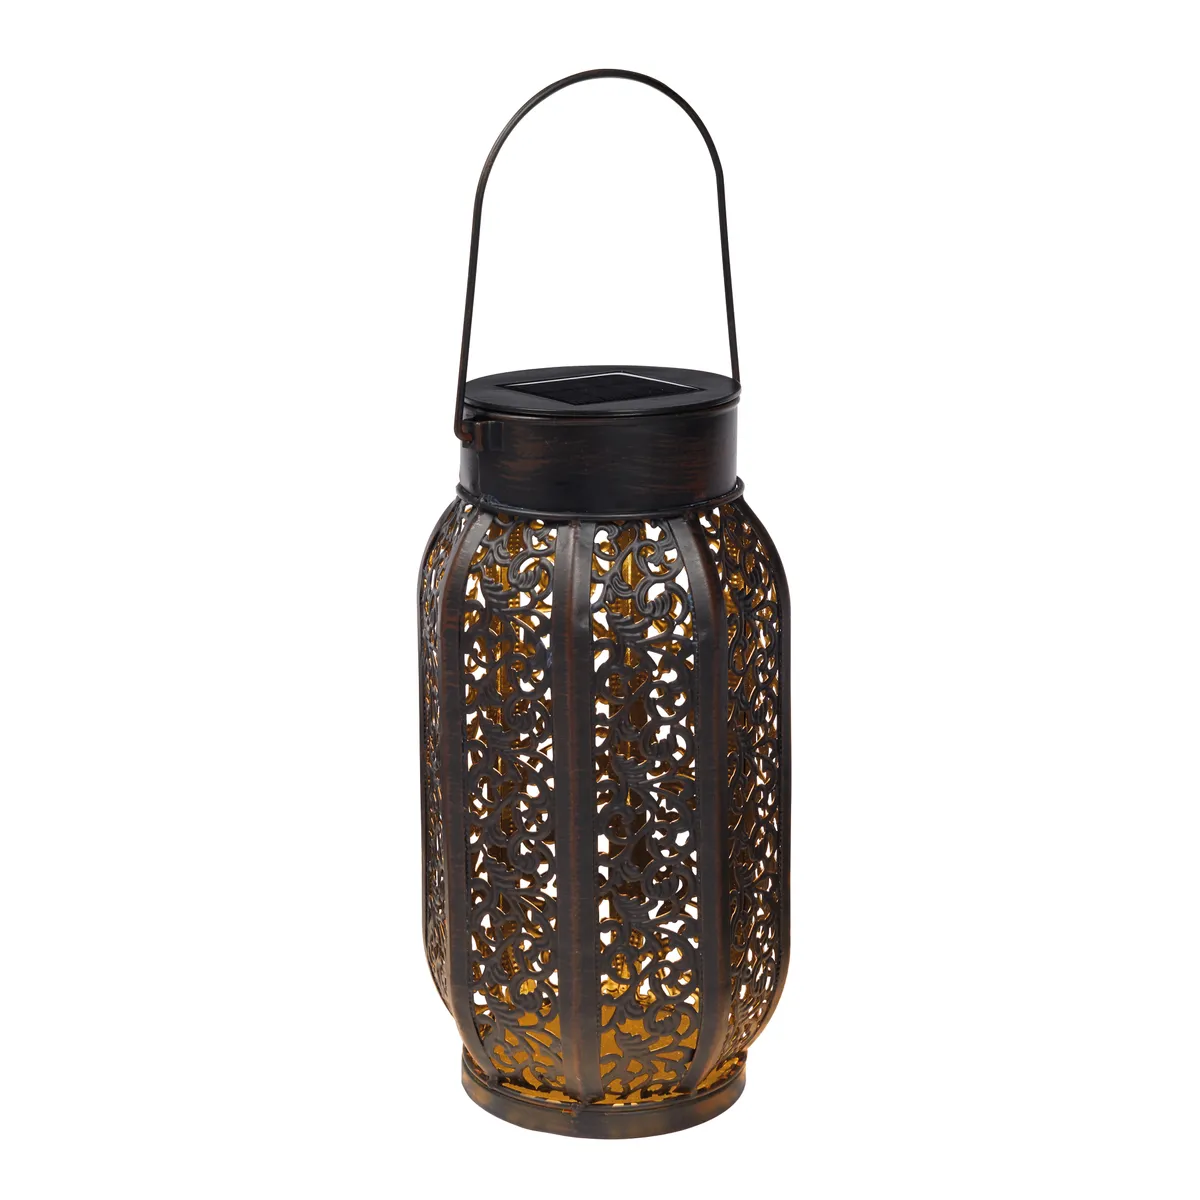 Temara Moroccan solar lantern, £39.99, Lights4fun